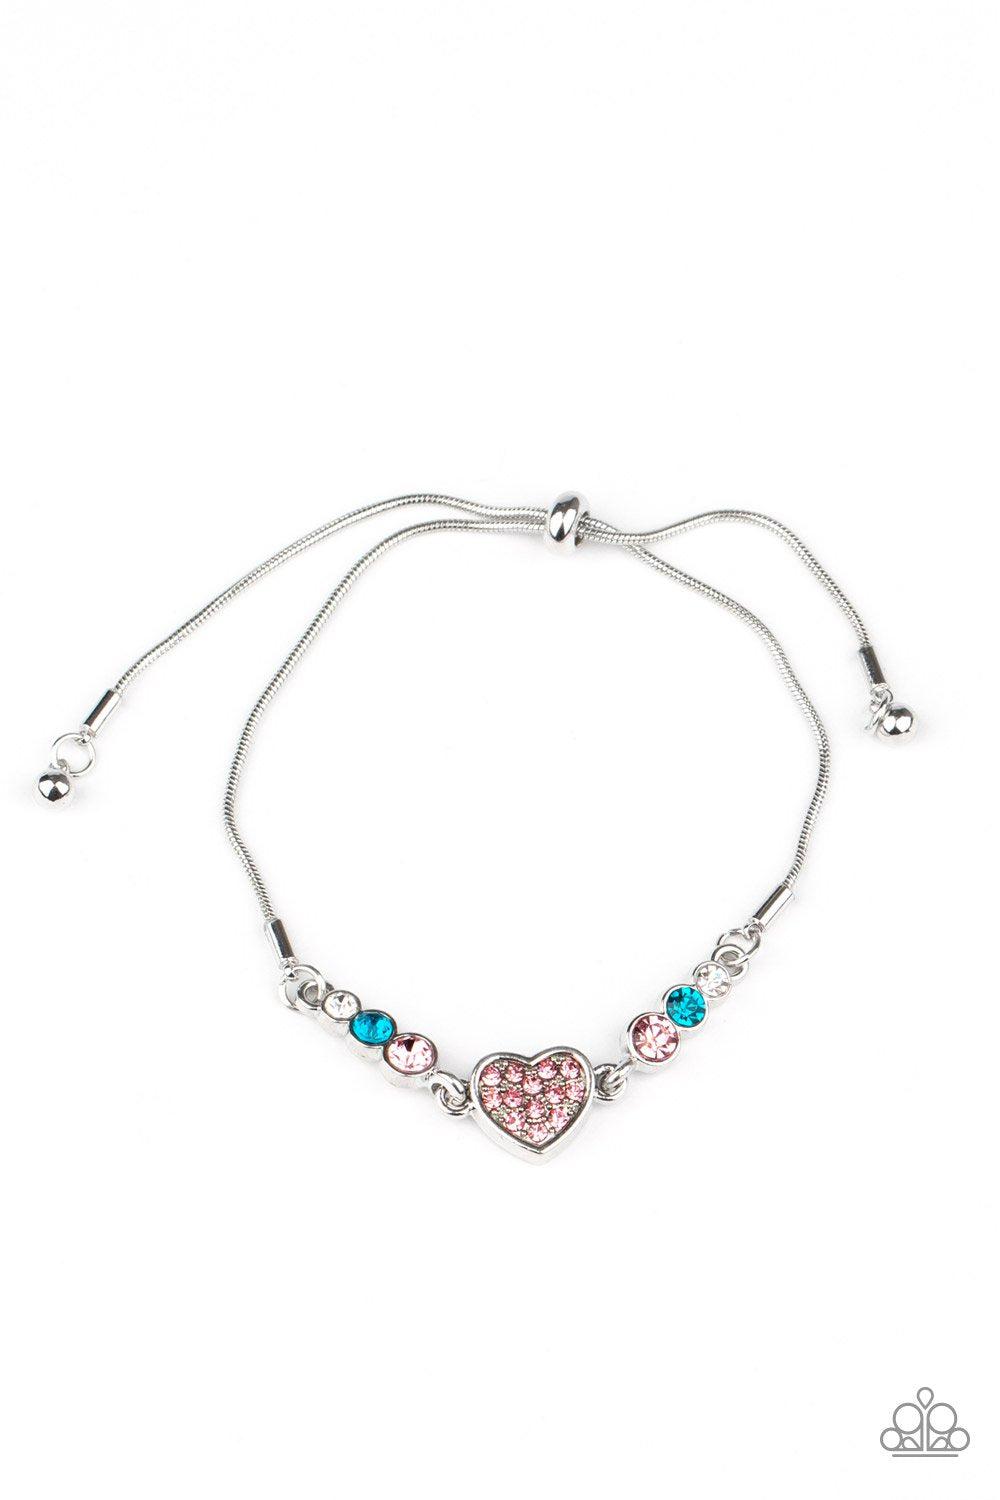 Big-Hearted Beam Multi Blue and Pink Rhinestone Heart Slide Bracelet - Paparazzi Accessories - lightbox -CarasShop.com - $5 Jewelry by Cara Jewels